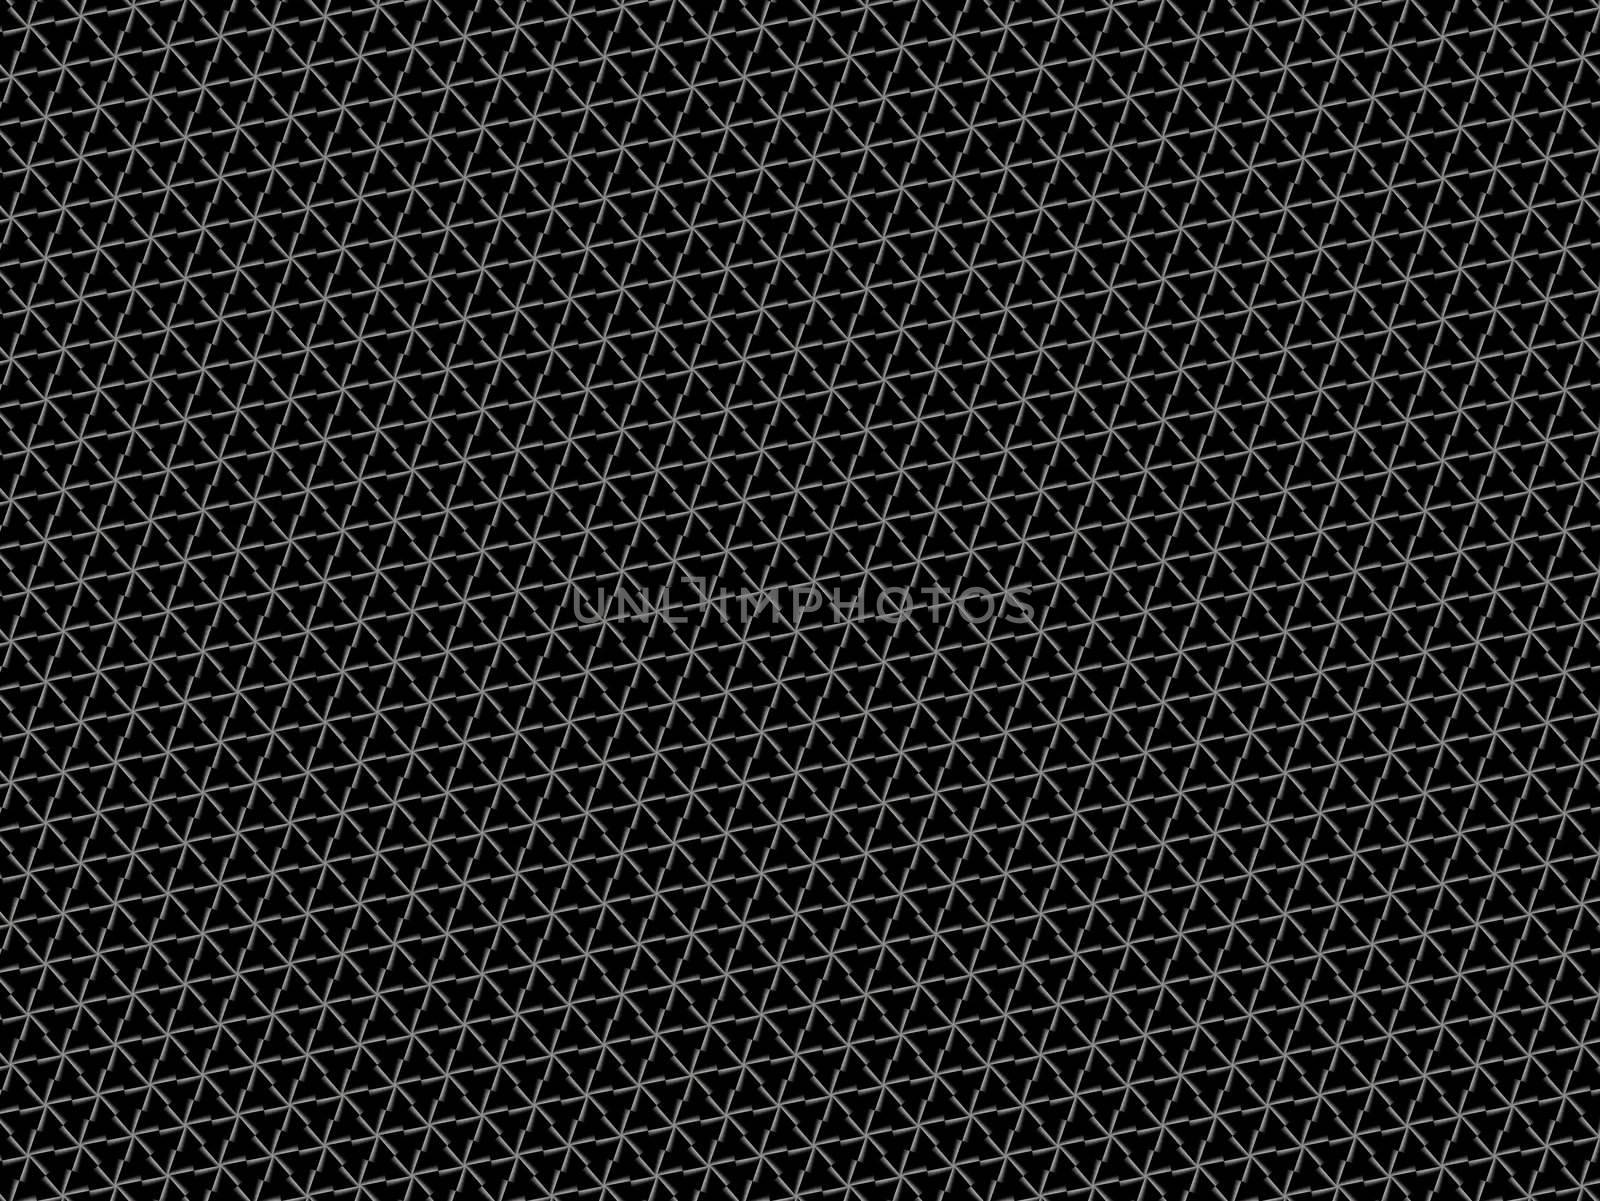 polygon texture pattern on black